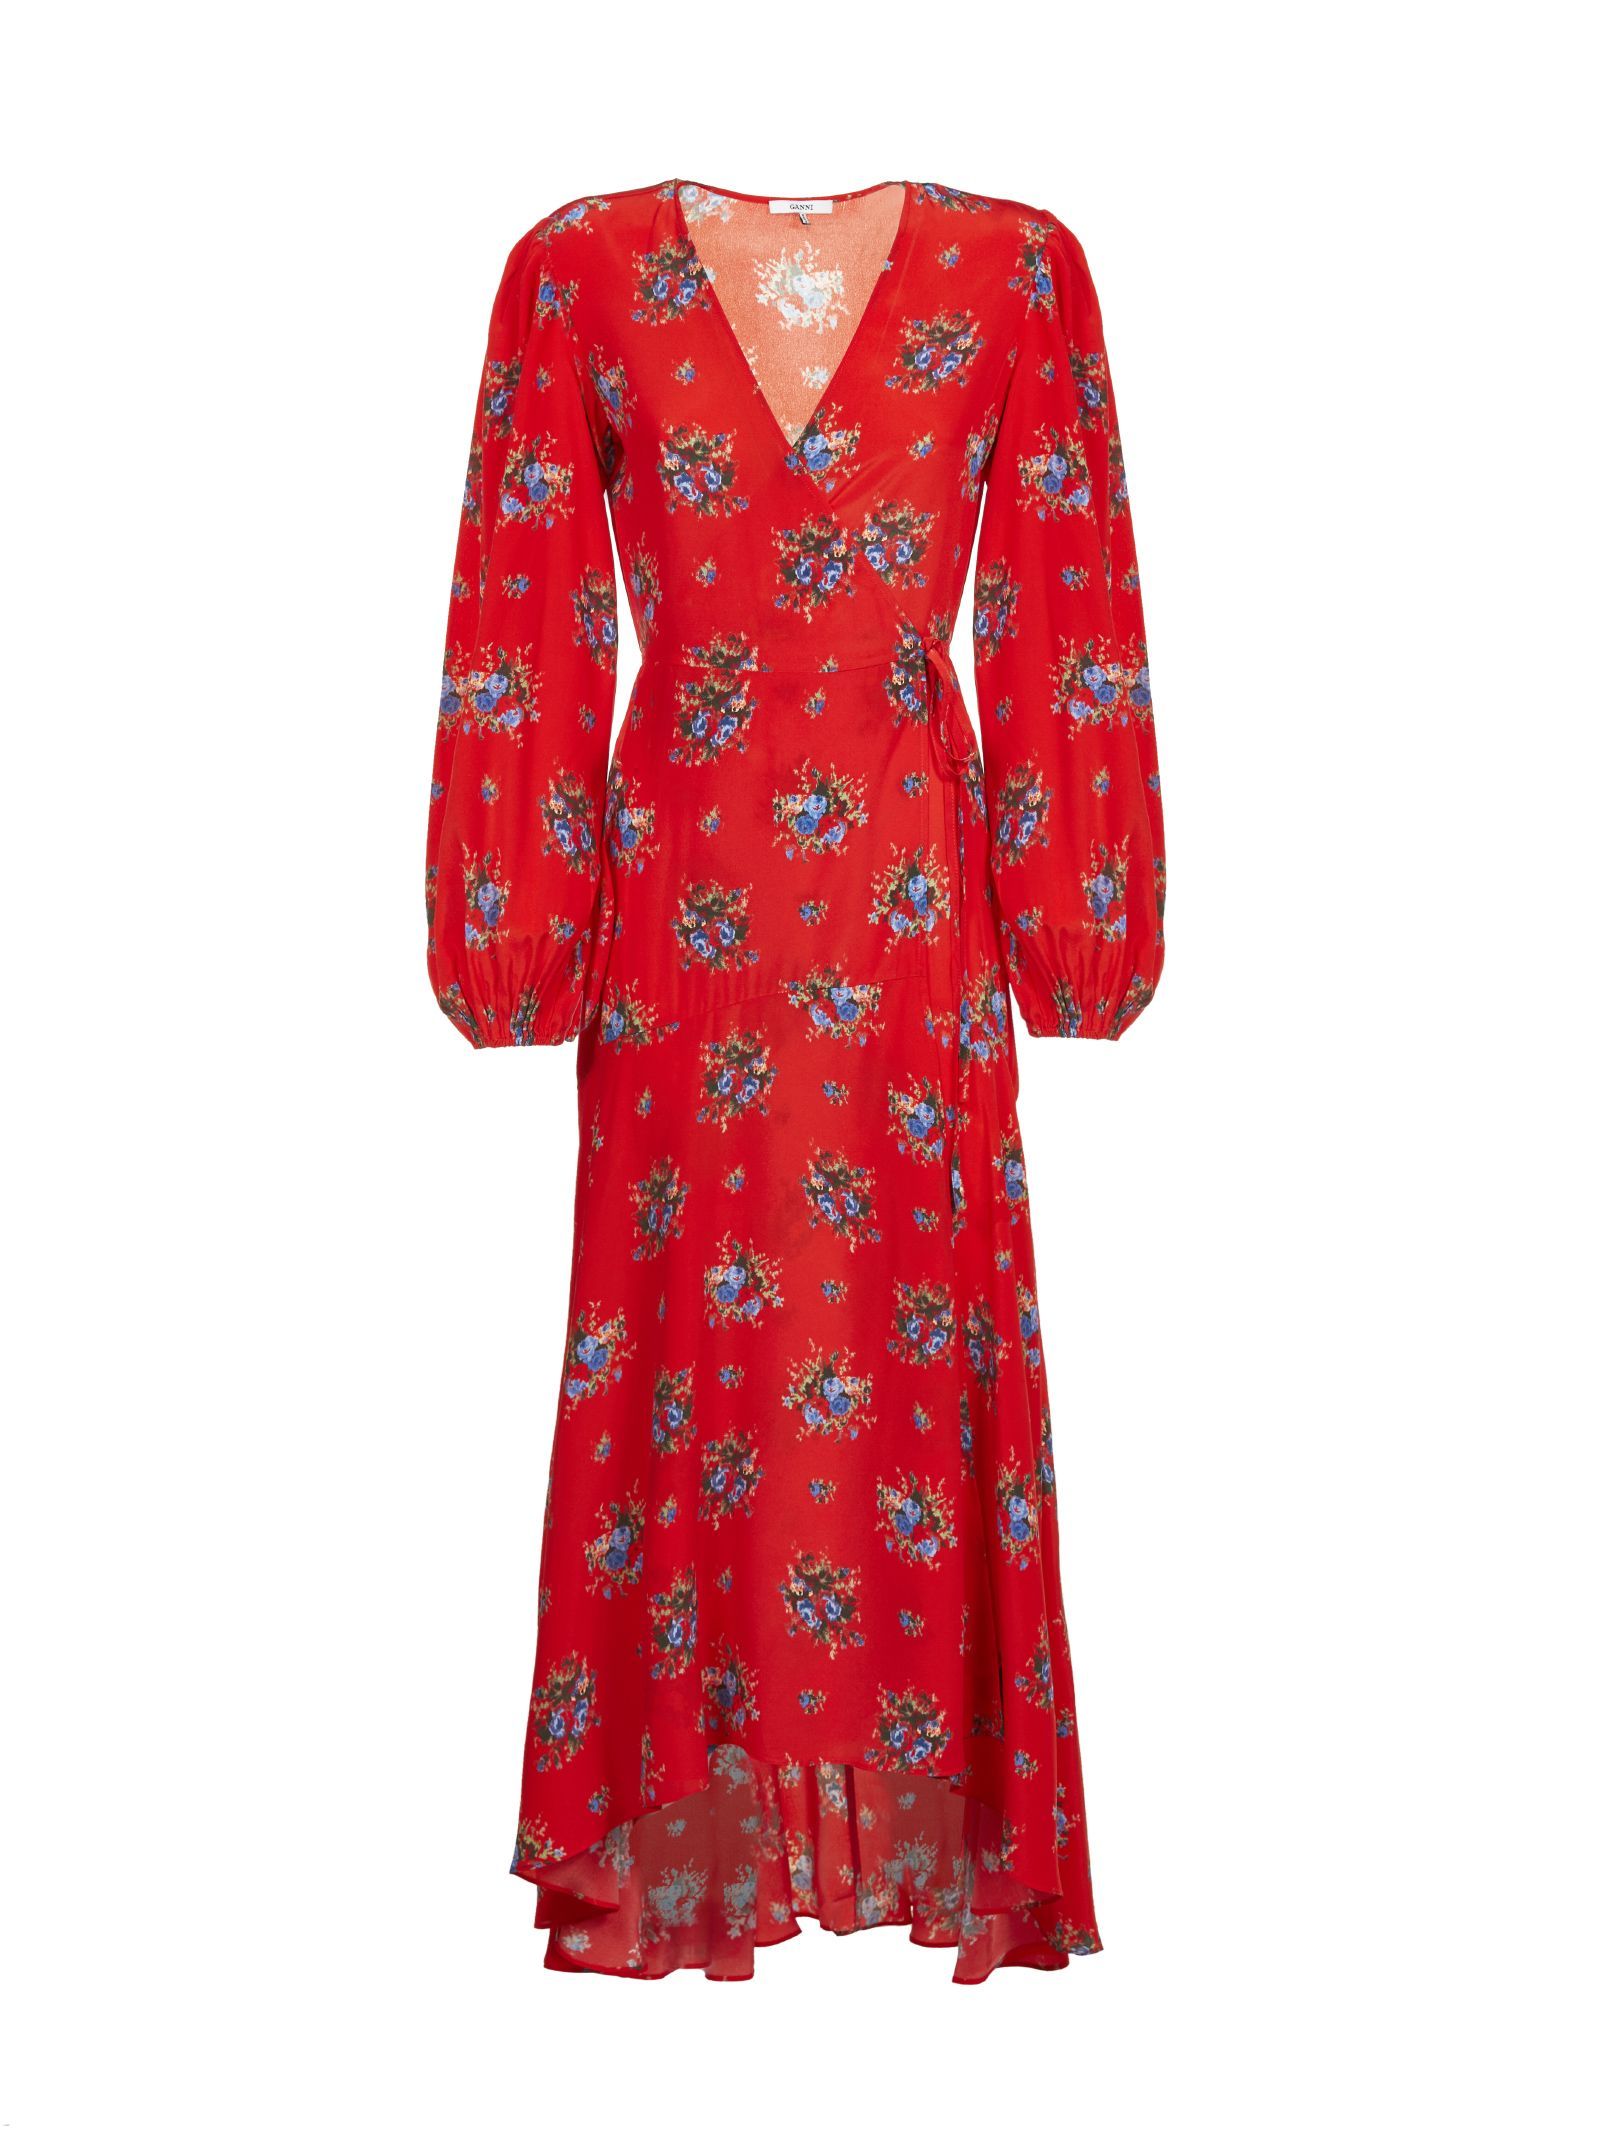 Ganni Printed Dress | Italist.com US